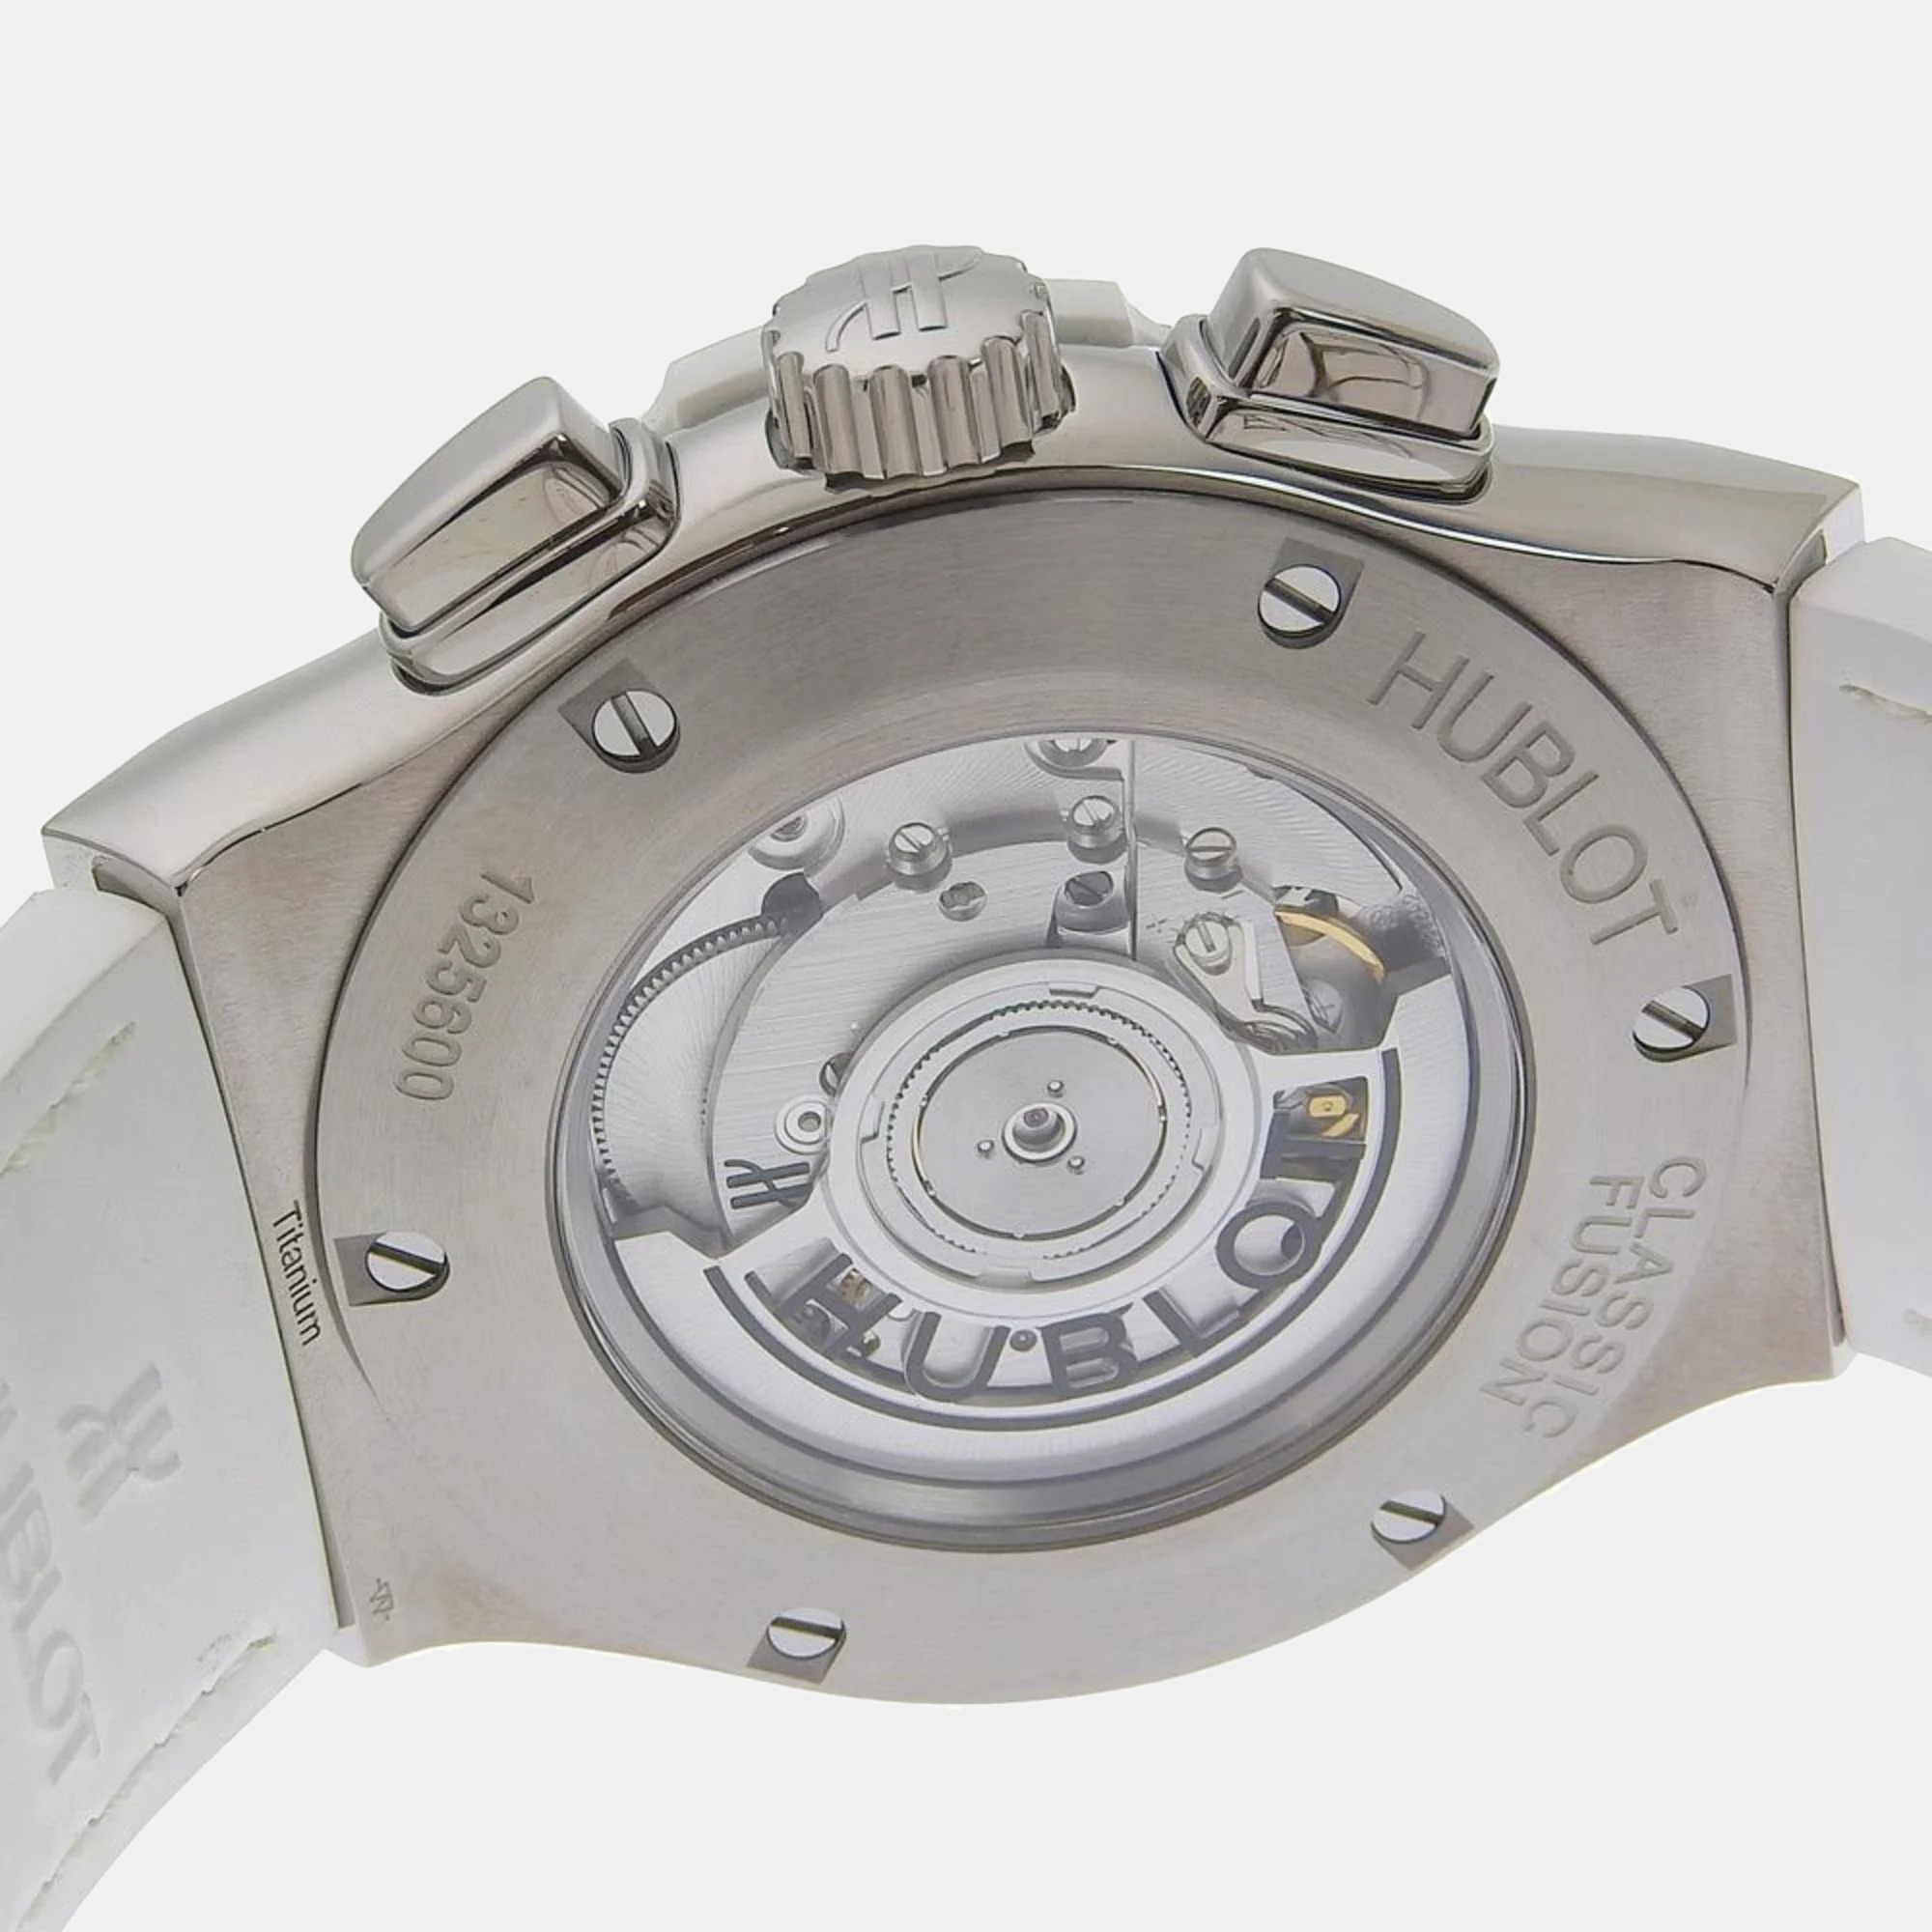 Hublot Black Stainless Steel Classic Fusion 525.NE.0127.LR Automatic Men's Wristwatch 45 Mm